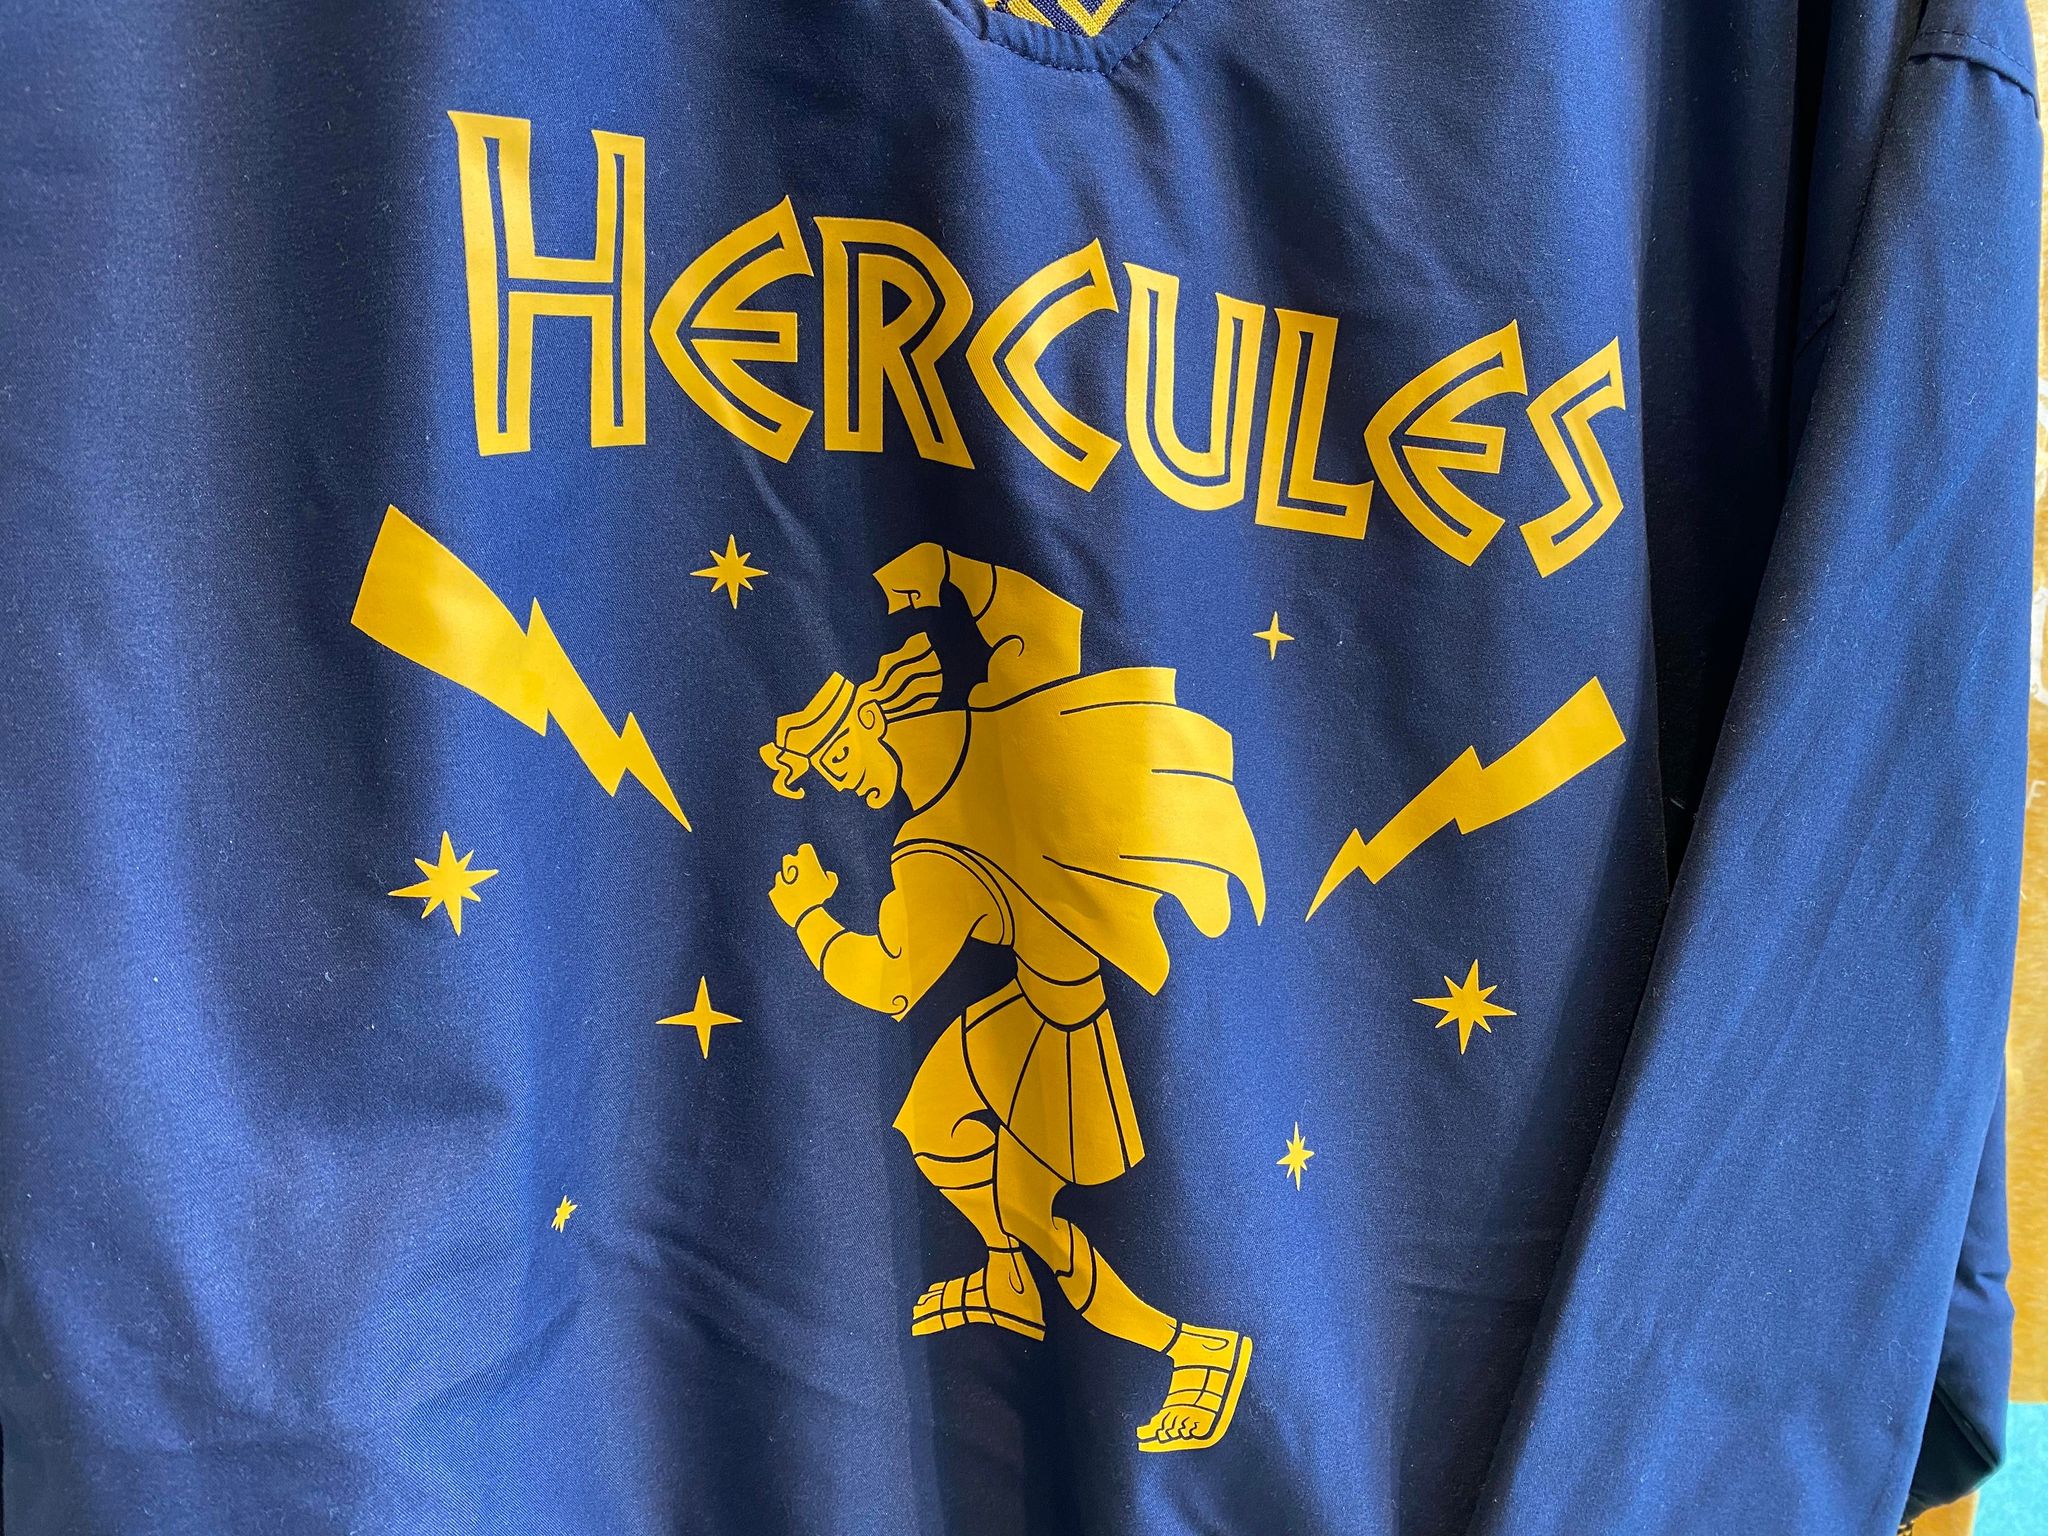 Hercules Clothing at DIsney Springs - Front logo